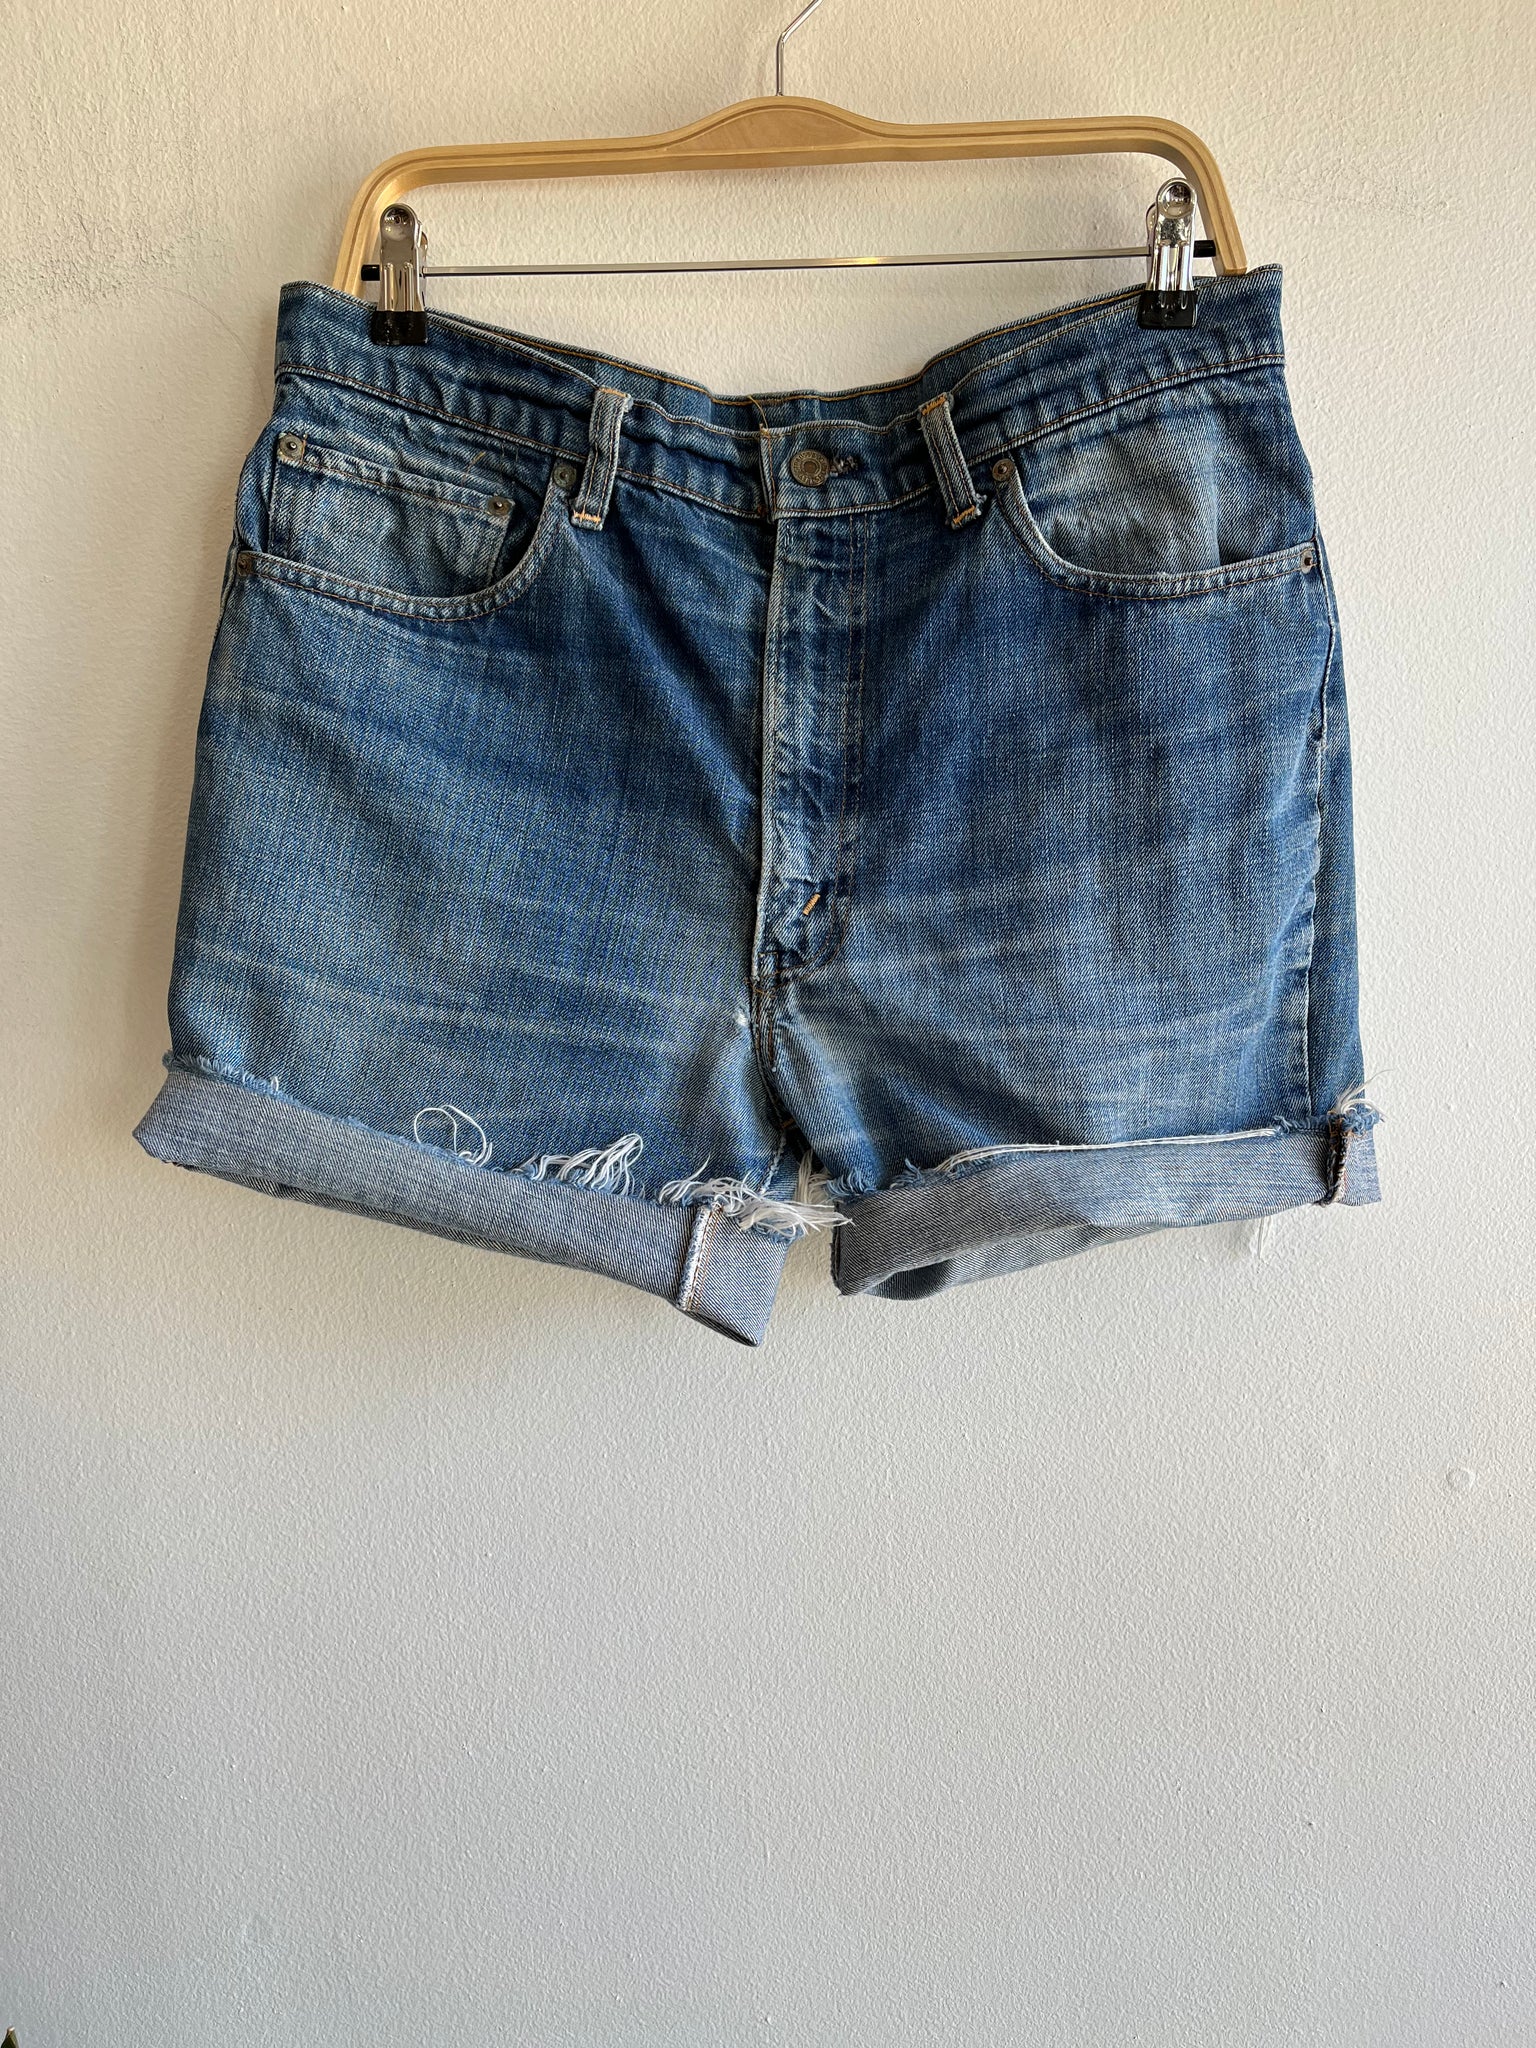 Vintage 1970’s Levi’s 517 Denim Shorts